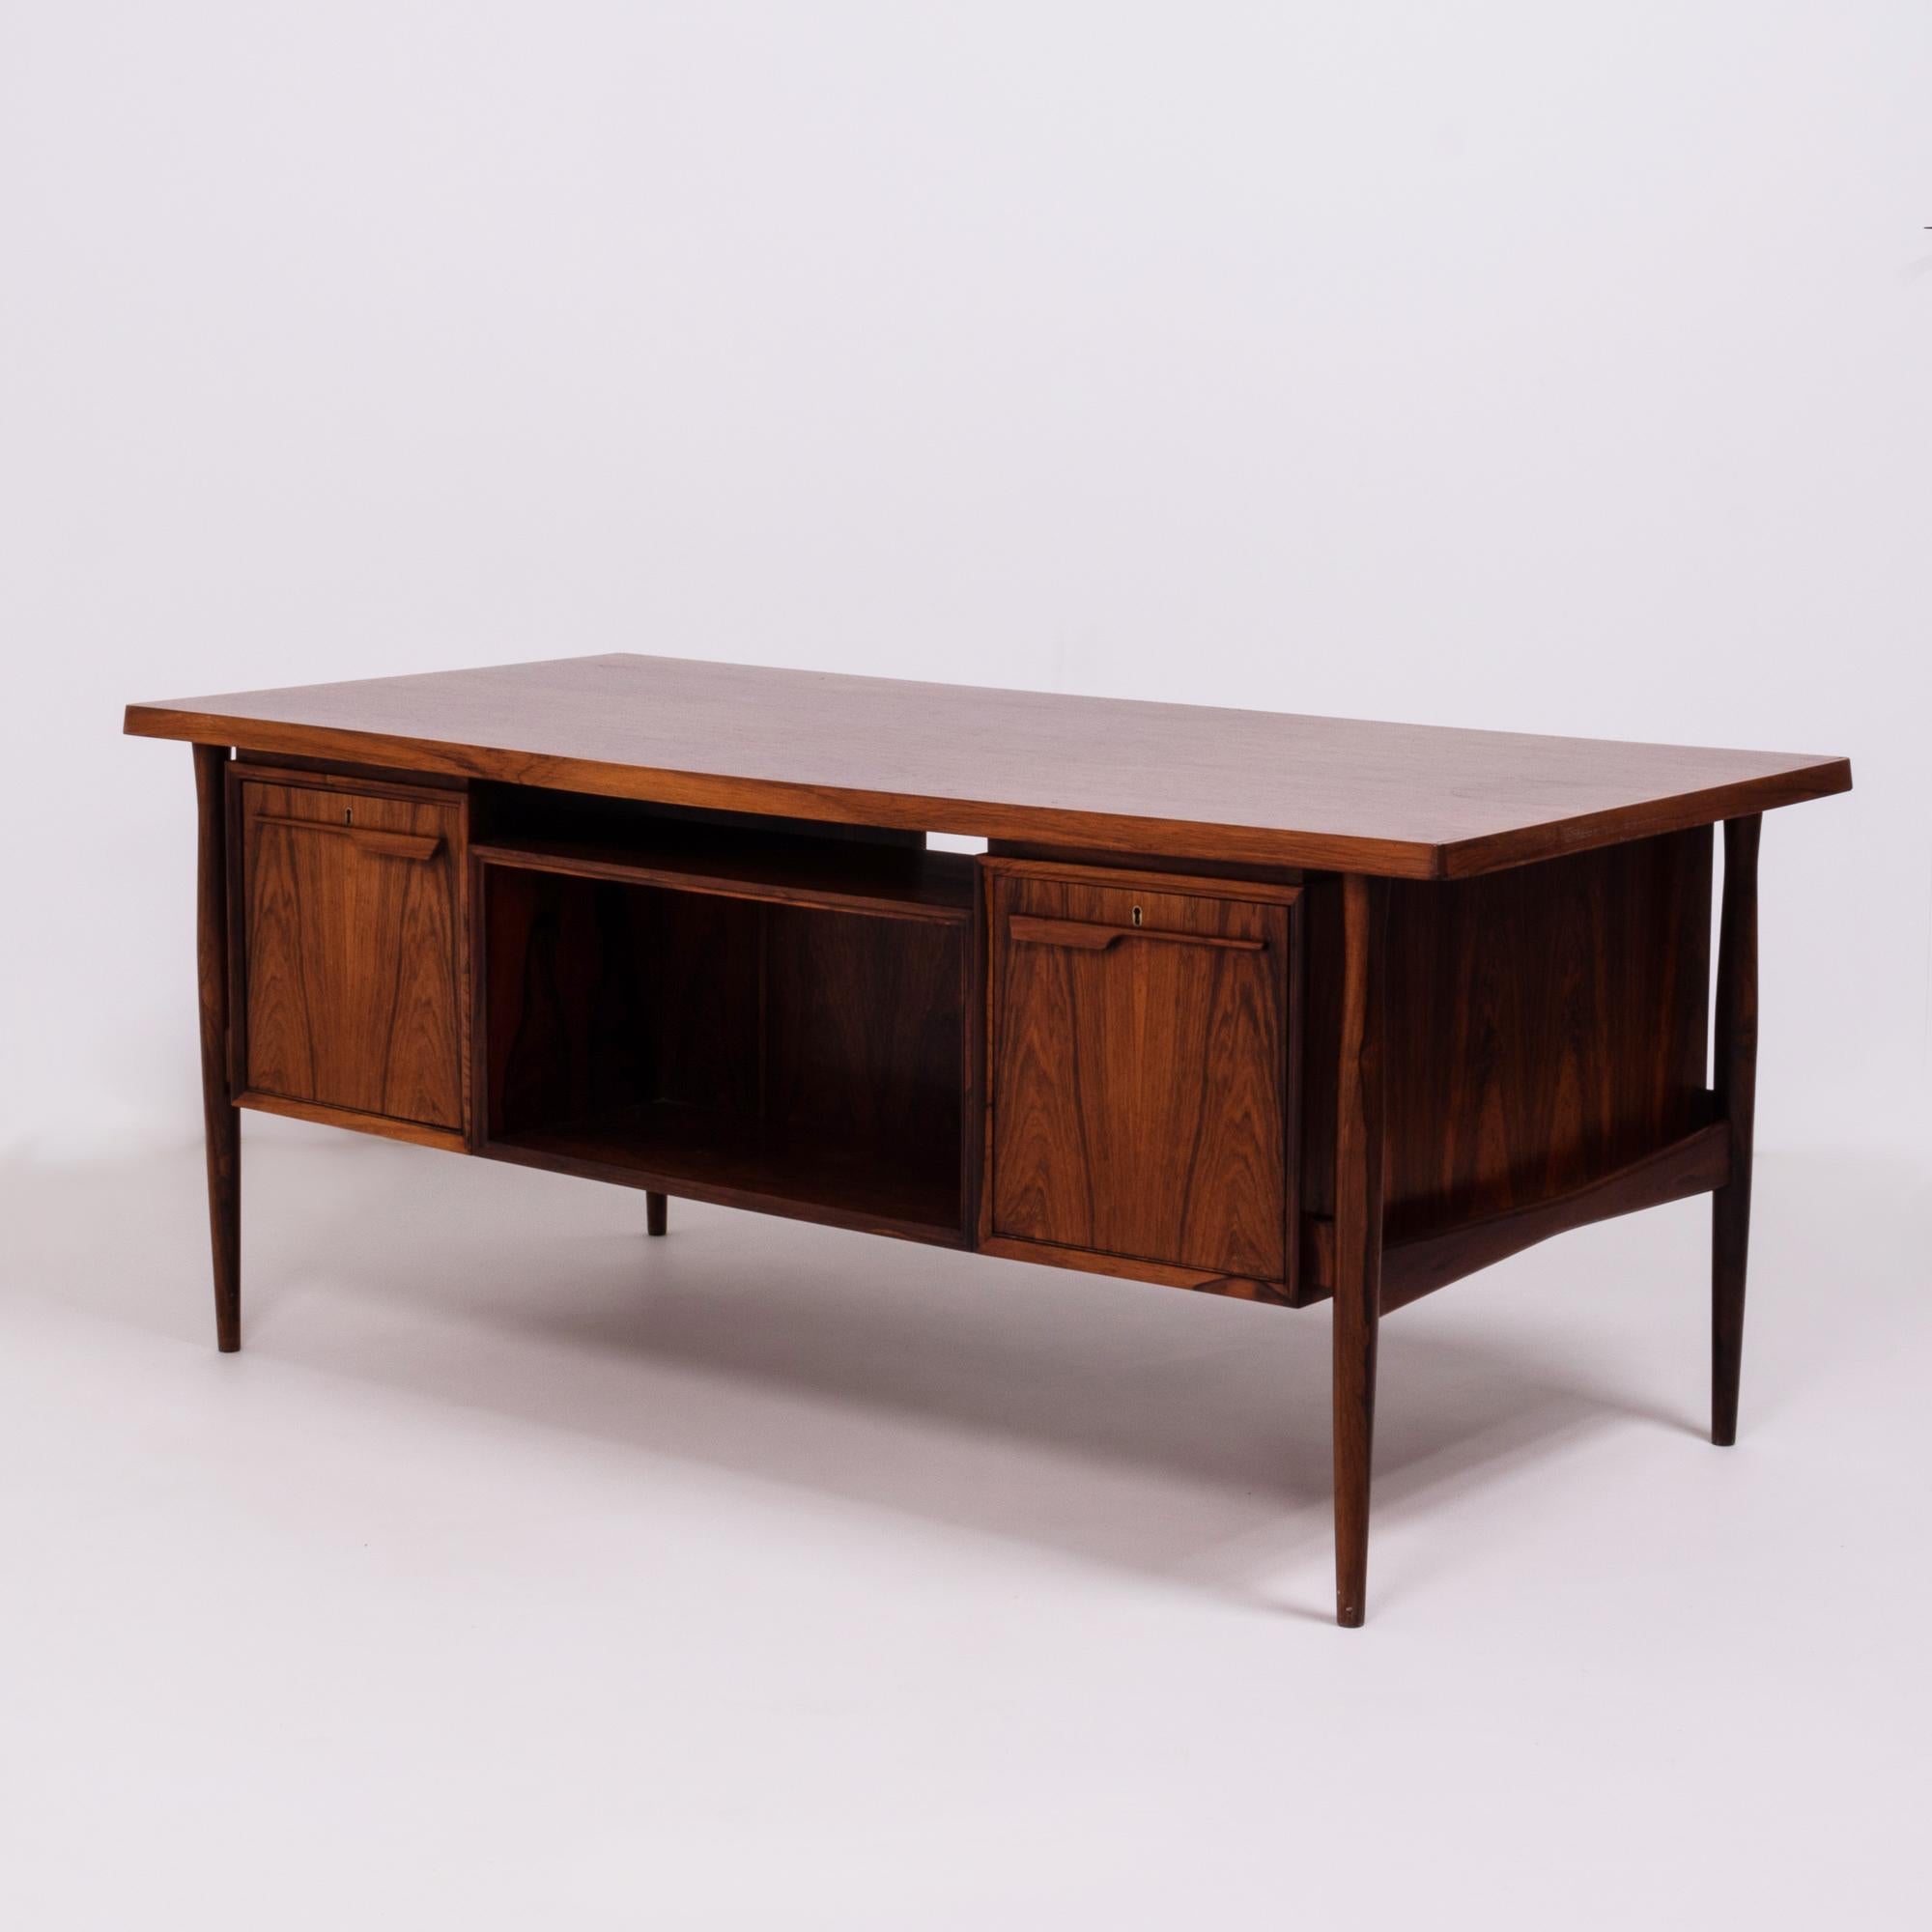 19th Century Midcentury Modern Brown Rosewood Desk, 20th Century, c 1960s, lockable drawers